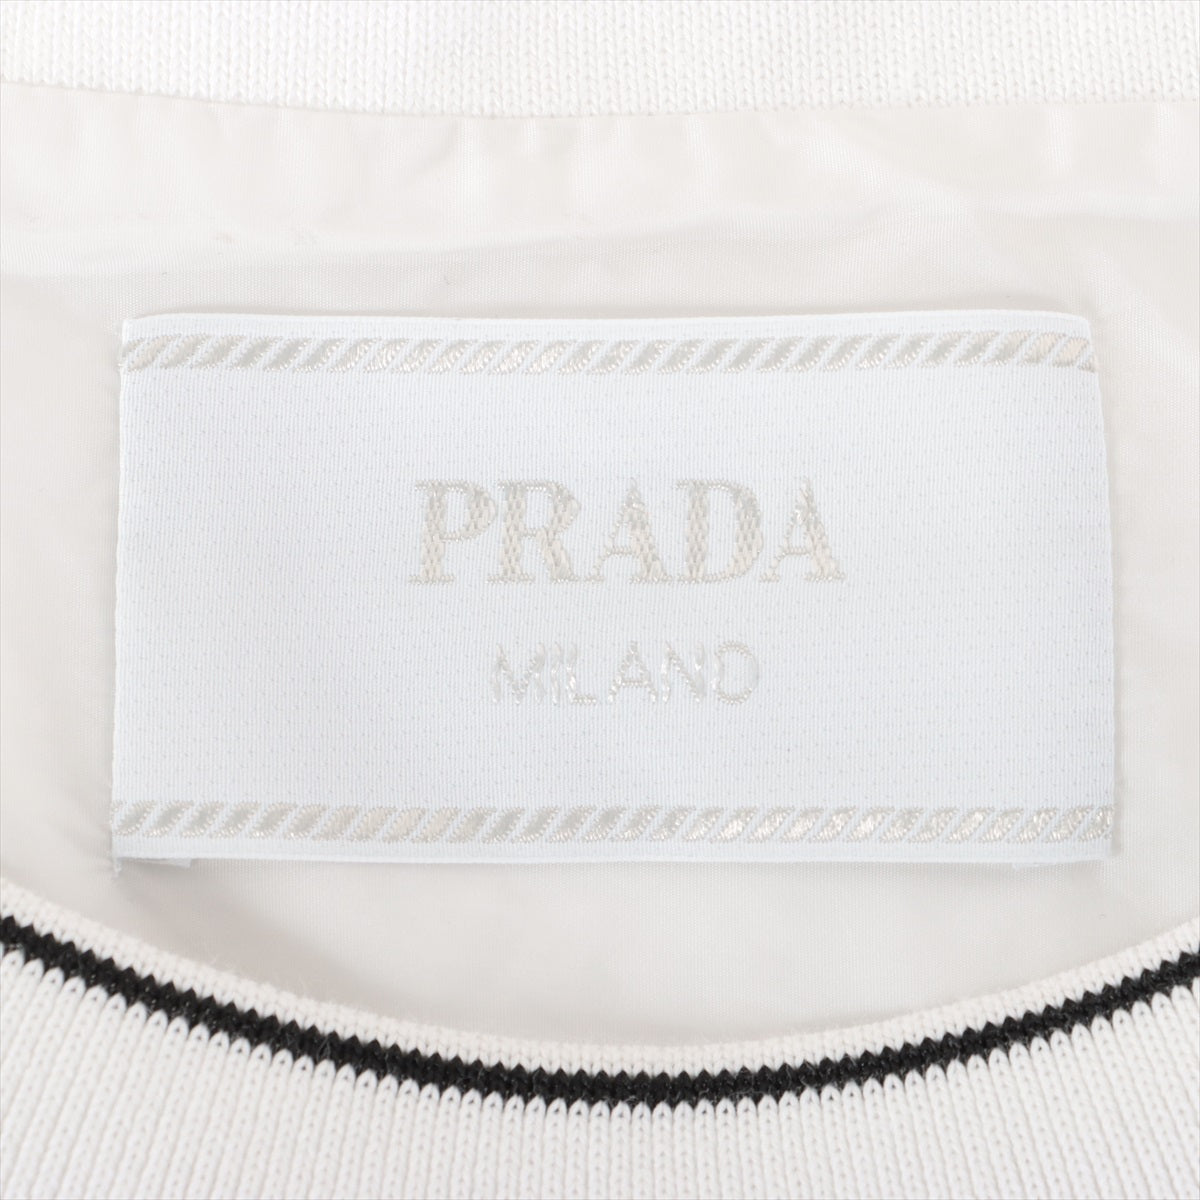 Prada 22SS Cotton & nylon T-shirt XL Men's White  with logo plate stitching UJN790